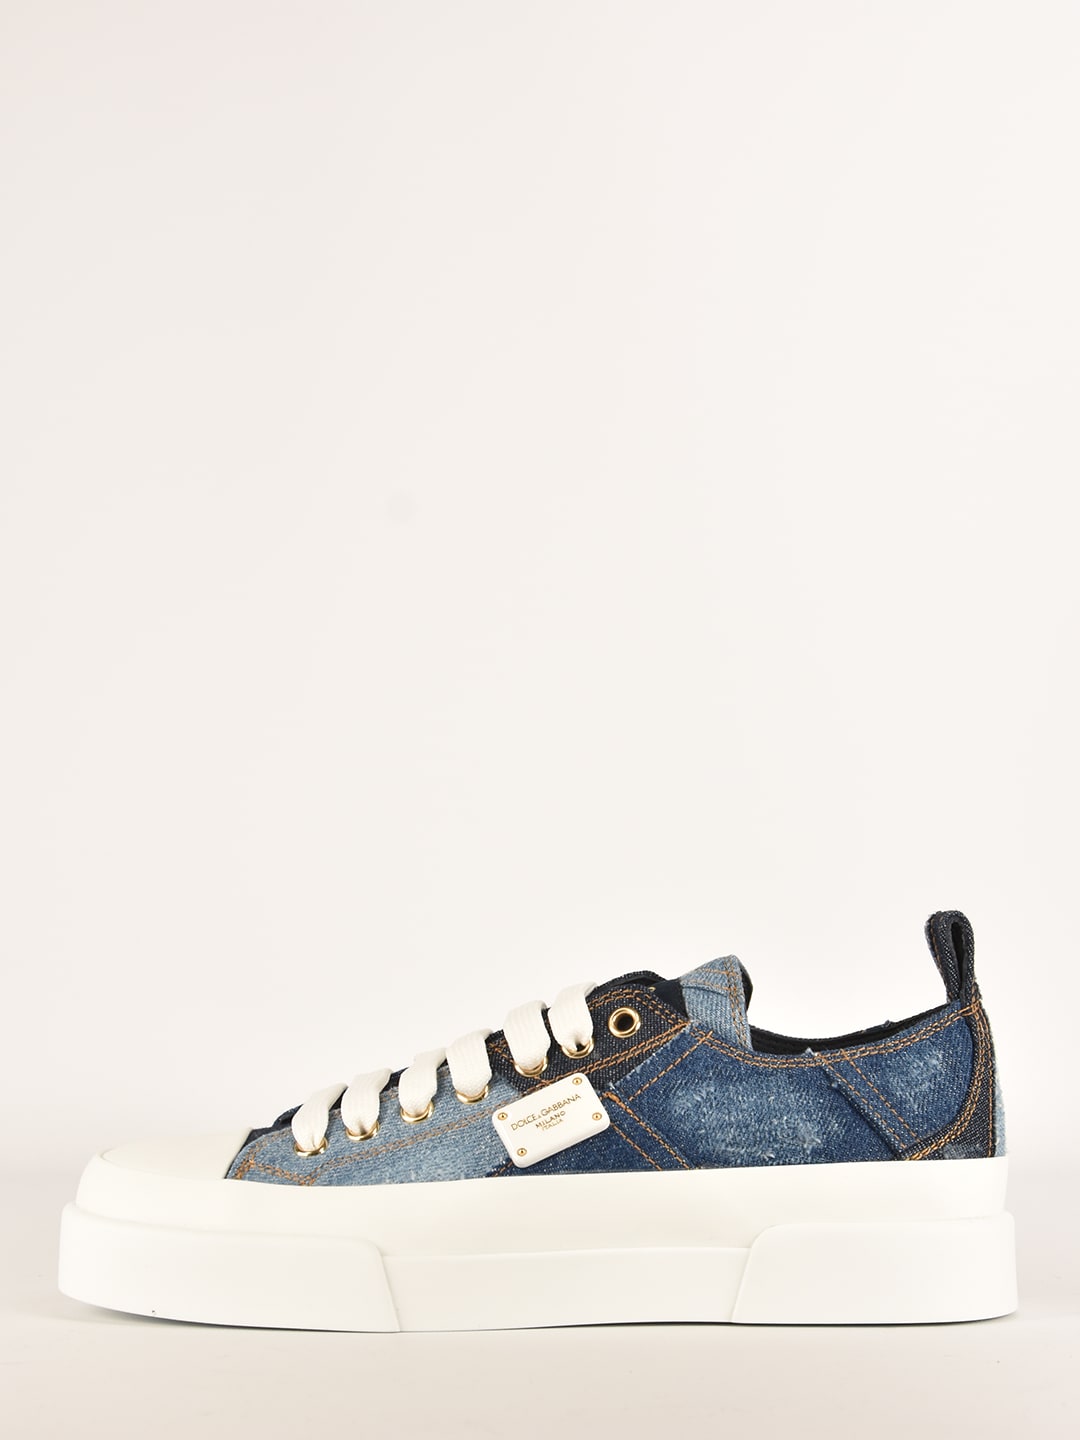 Dolce & Gabbana Denim Patchwork Sneakers